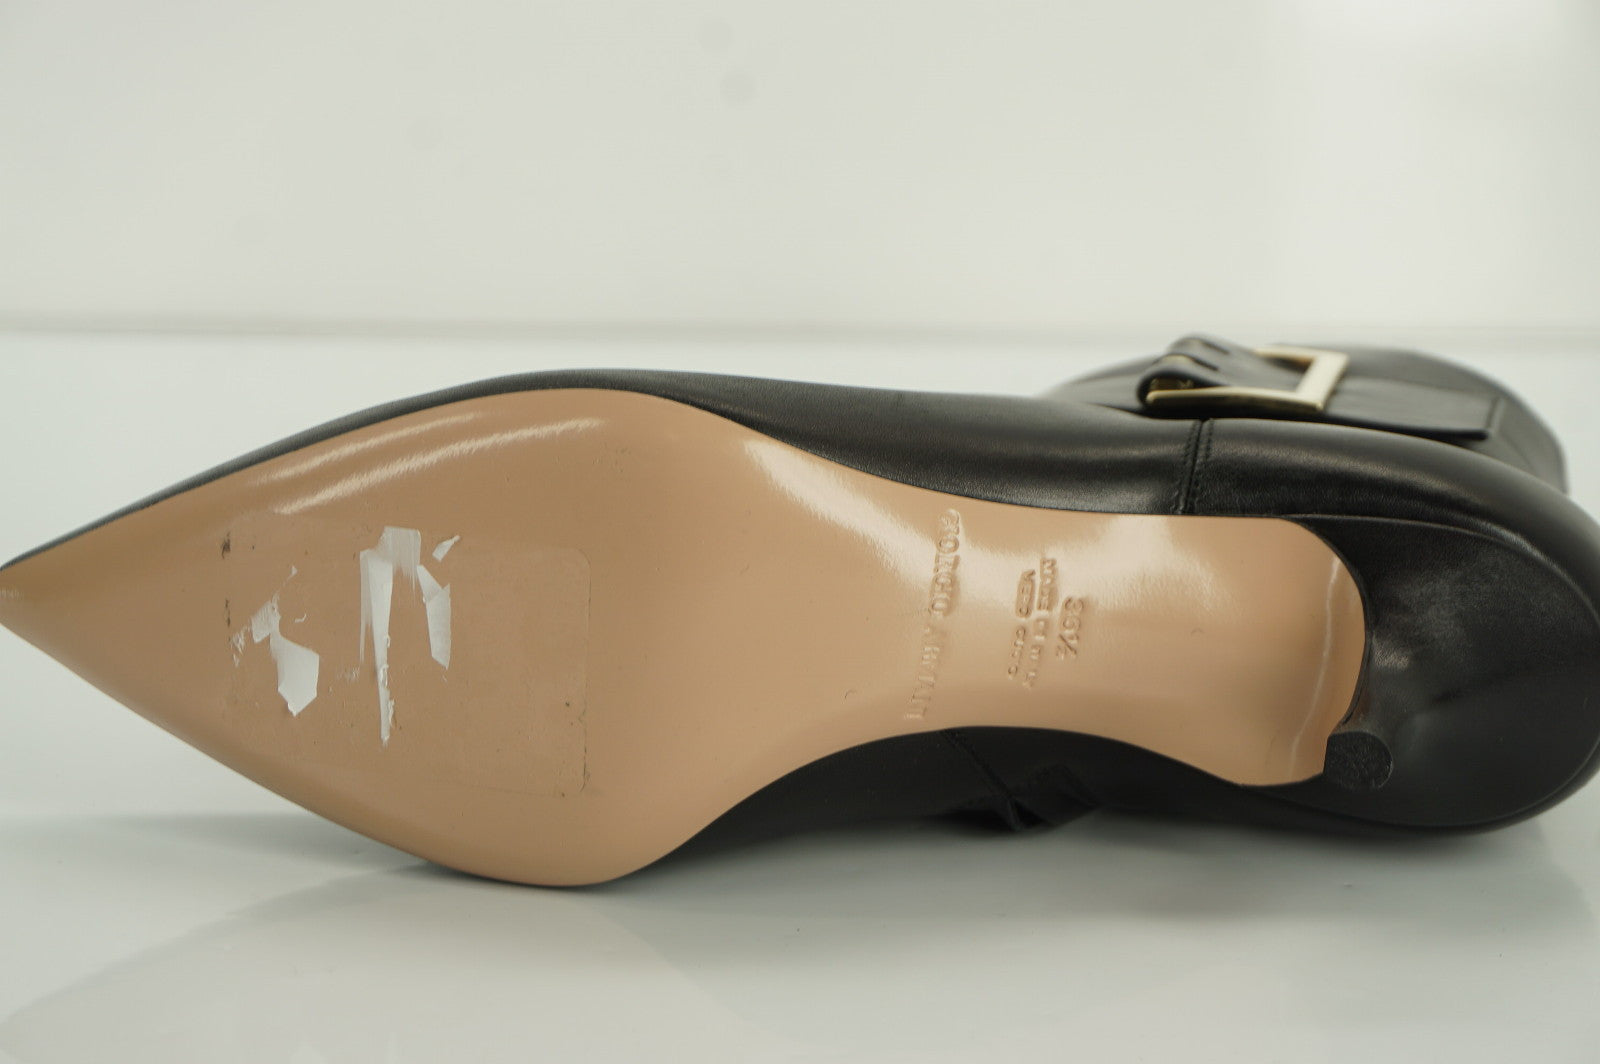 Giorgio Armani Tronchetto Buckle Ankle boots SZ 36.5 kitten heels NIB $1050